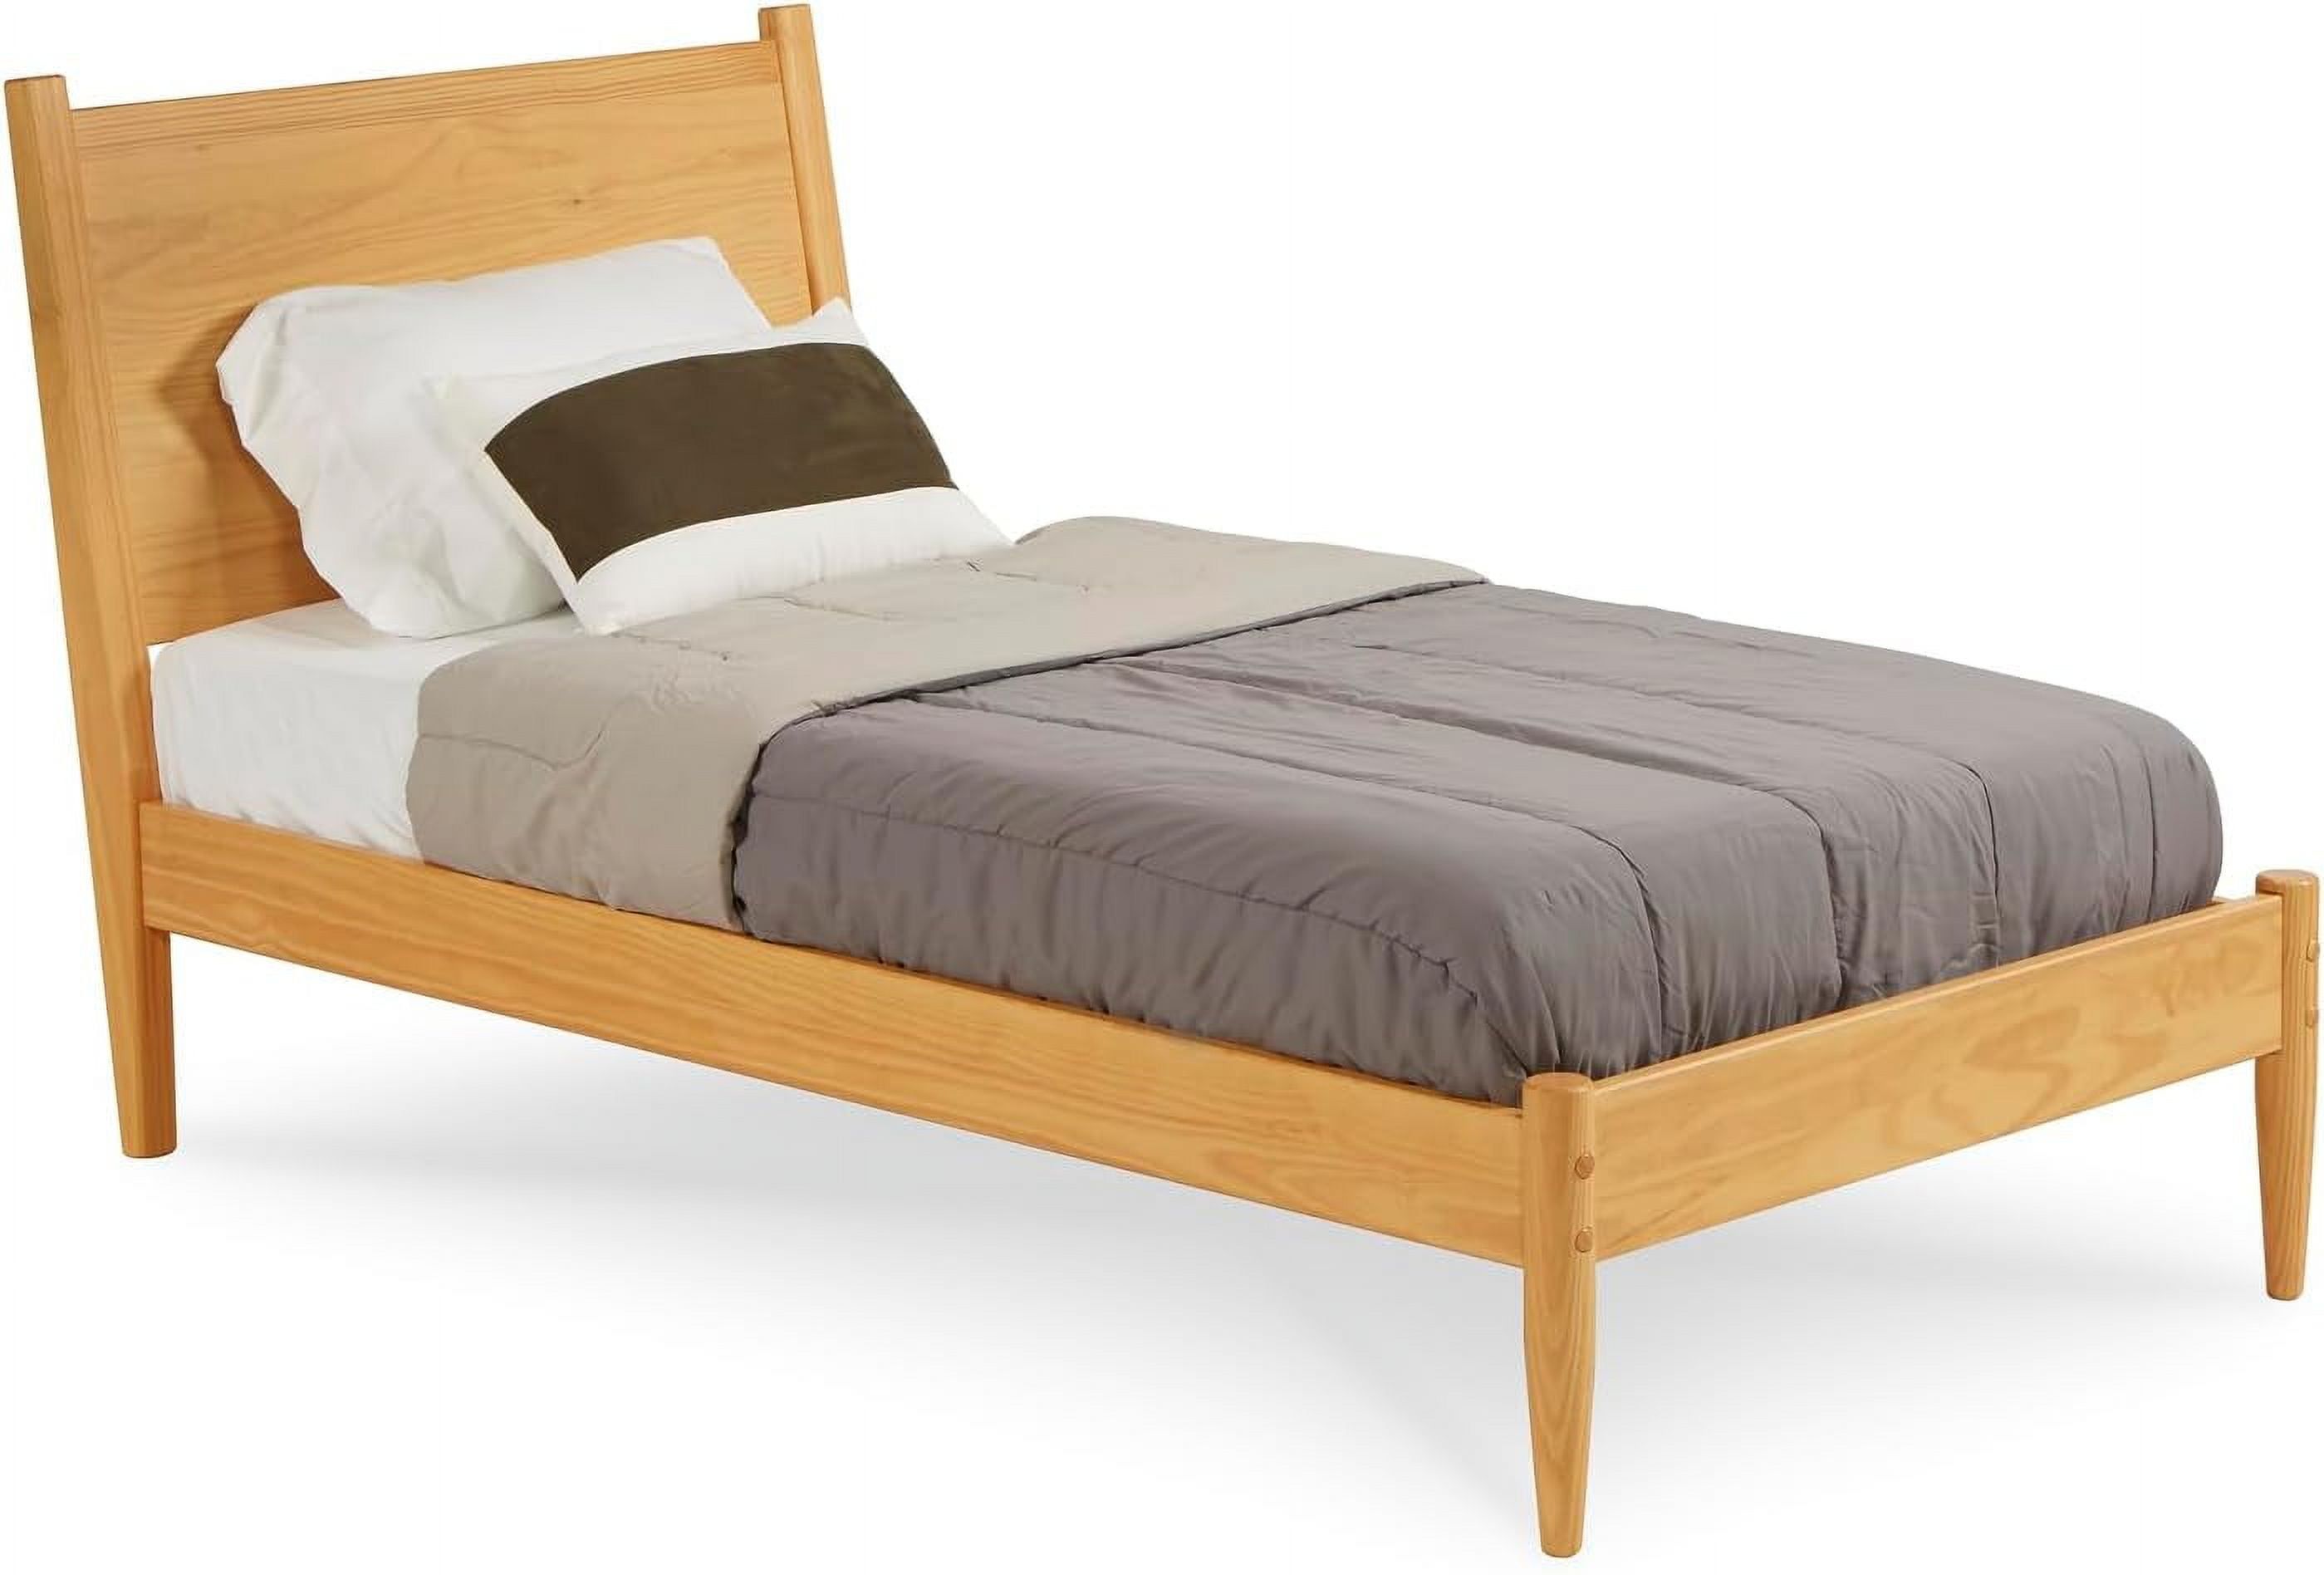 Scandinavian Oak Twin Pine Wood Platform Bed with Slats